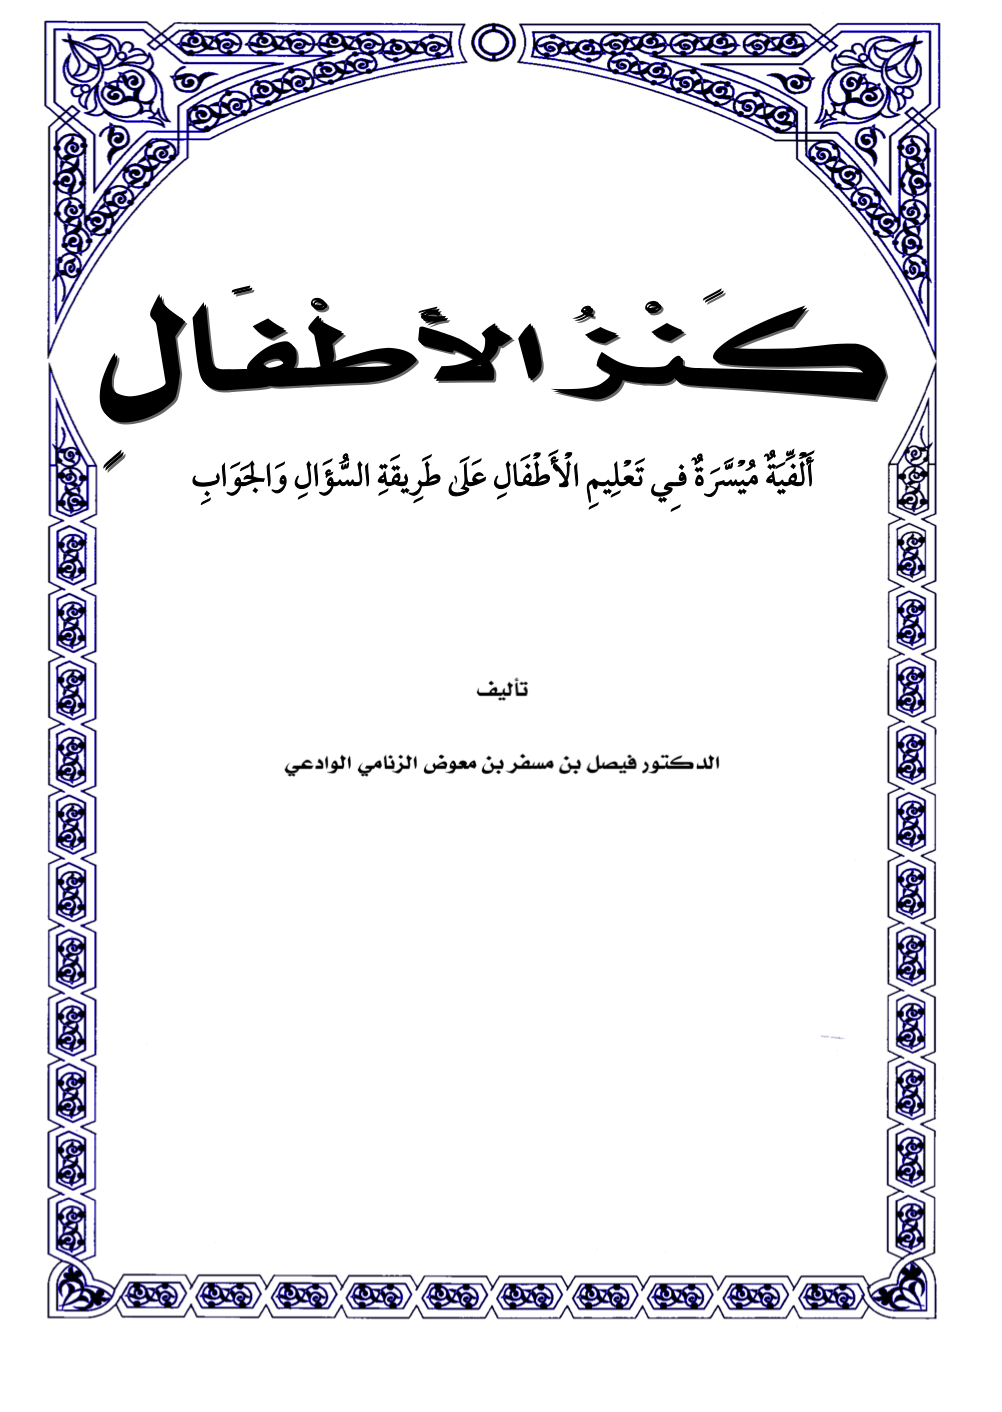 Kawtar Kniz - Arabic interpreter - Found in Translation, Inc